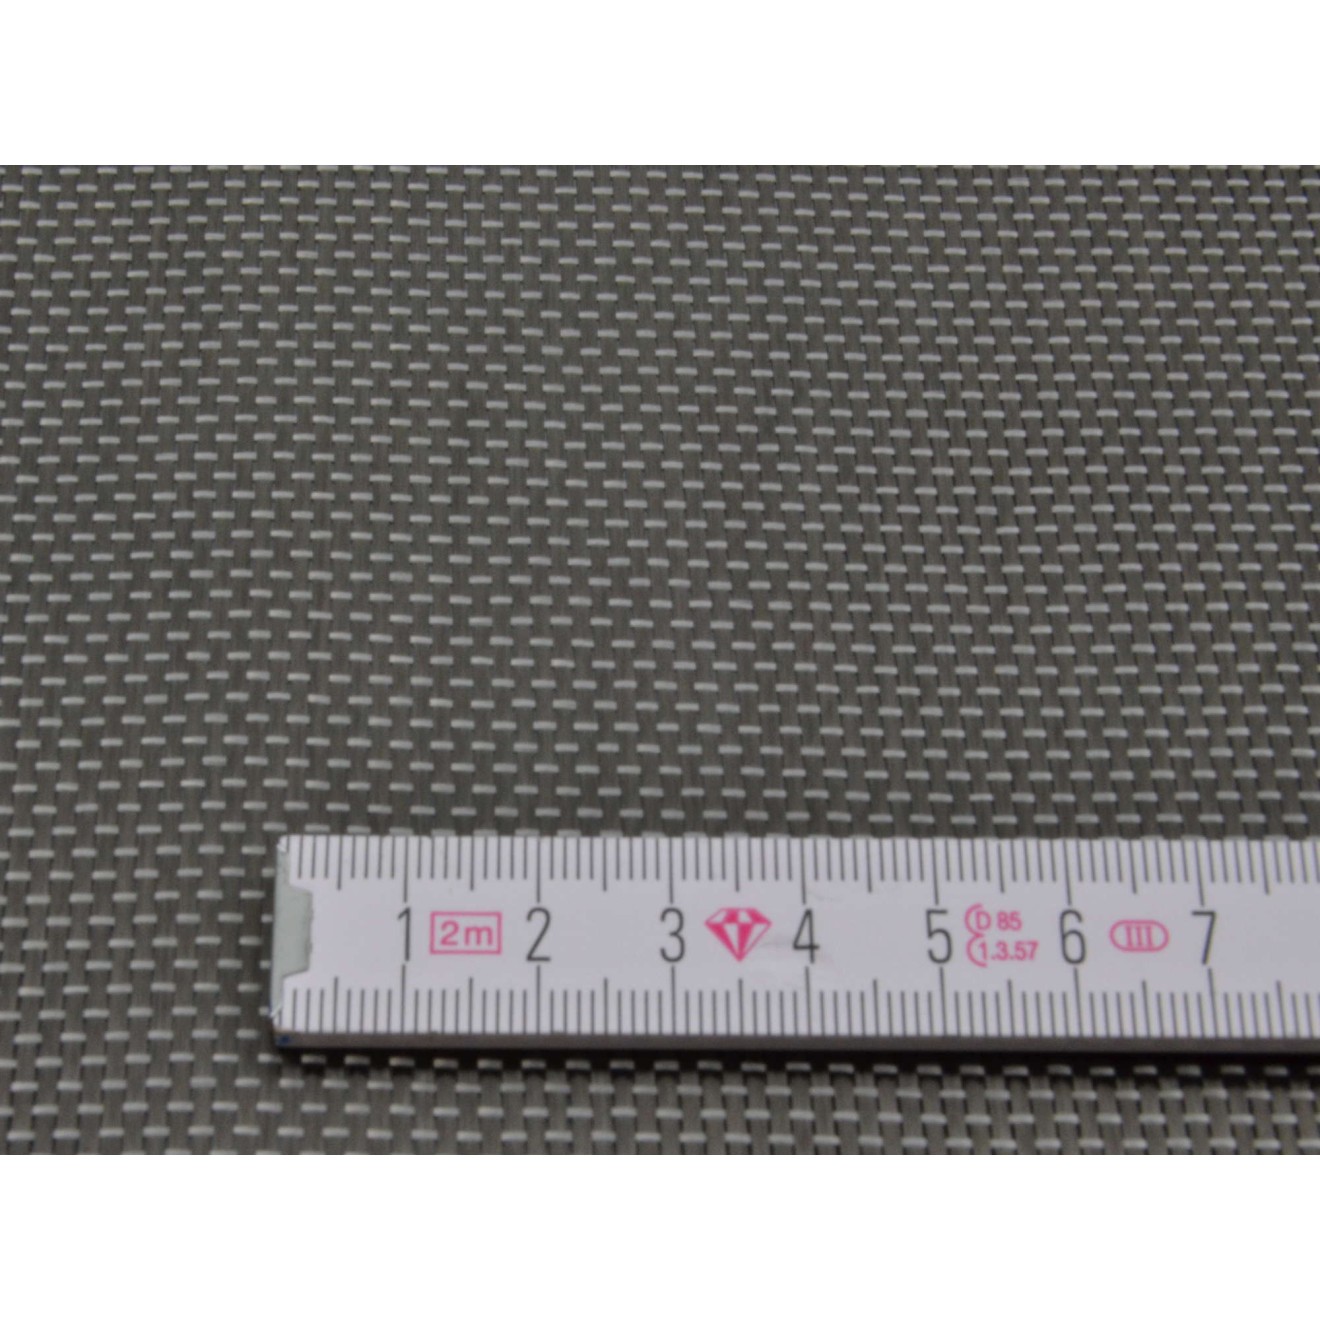 Woven carbon fiber fabric UD 3K 140g/m²